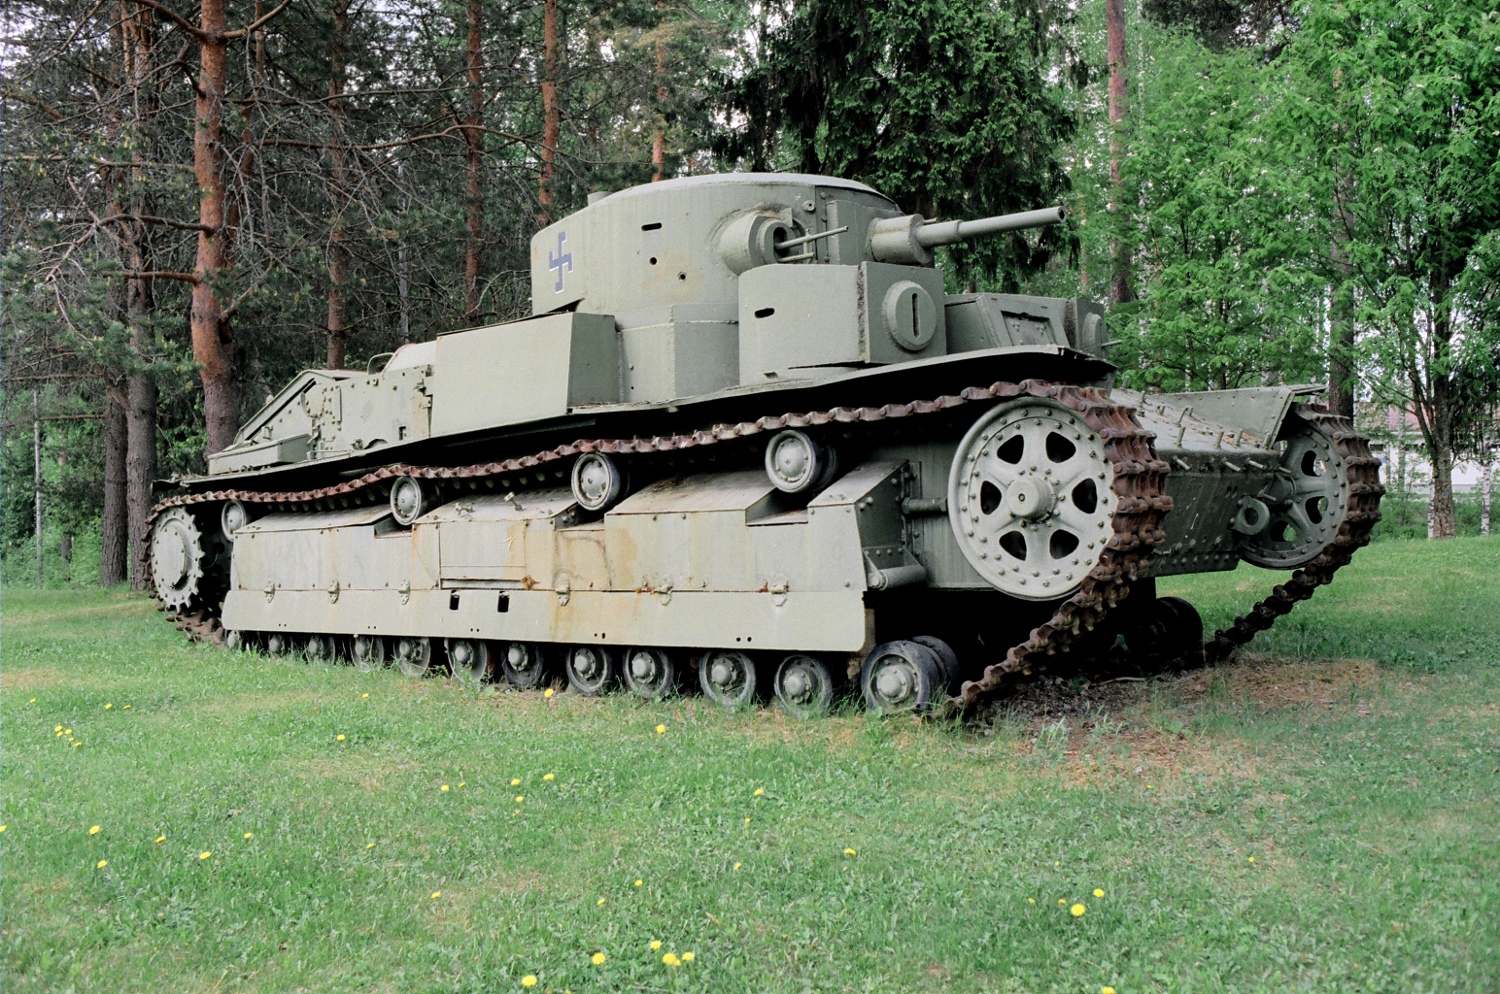 http://upload.wikimedia.org/wikipedia/commons/f/f5/T-28_tank_in_Mikkeli_20130531_001.jpg